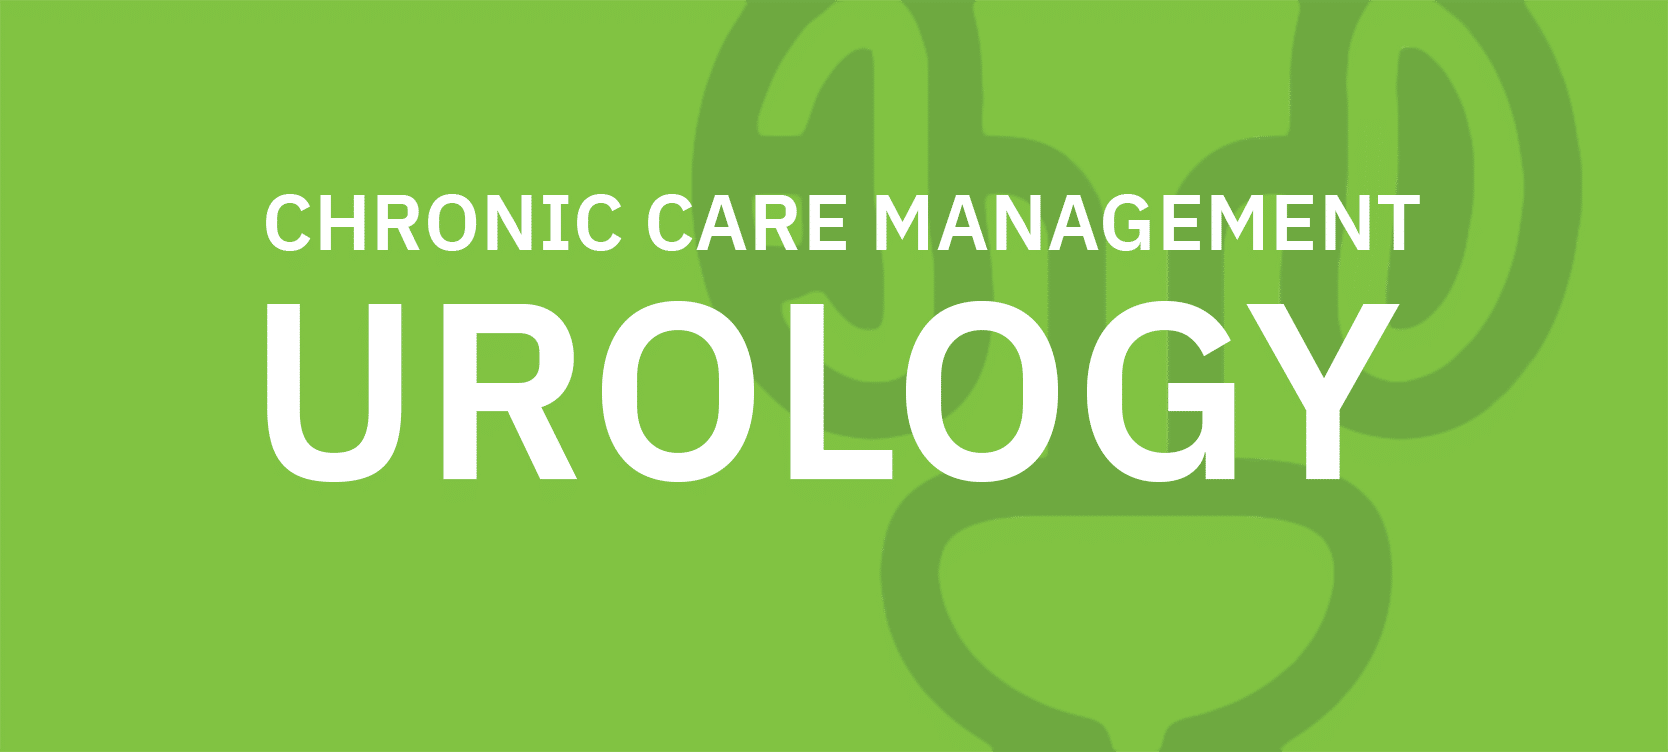 Chronic Care Management_Urology